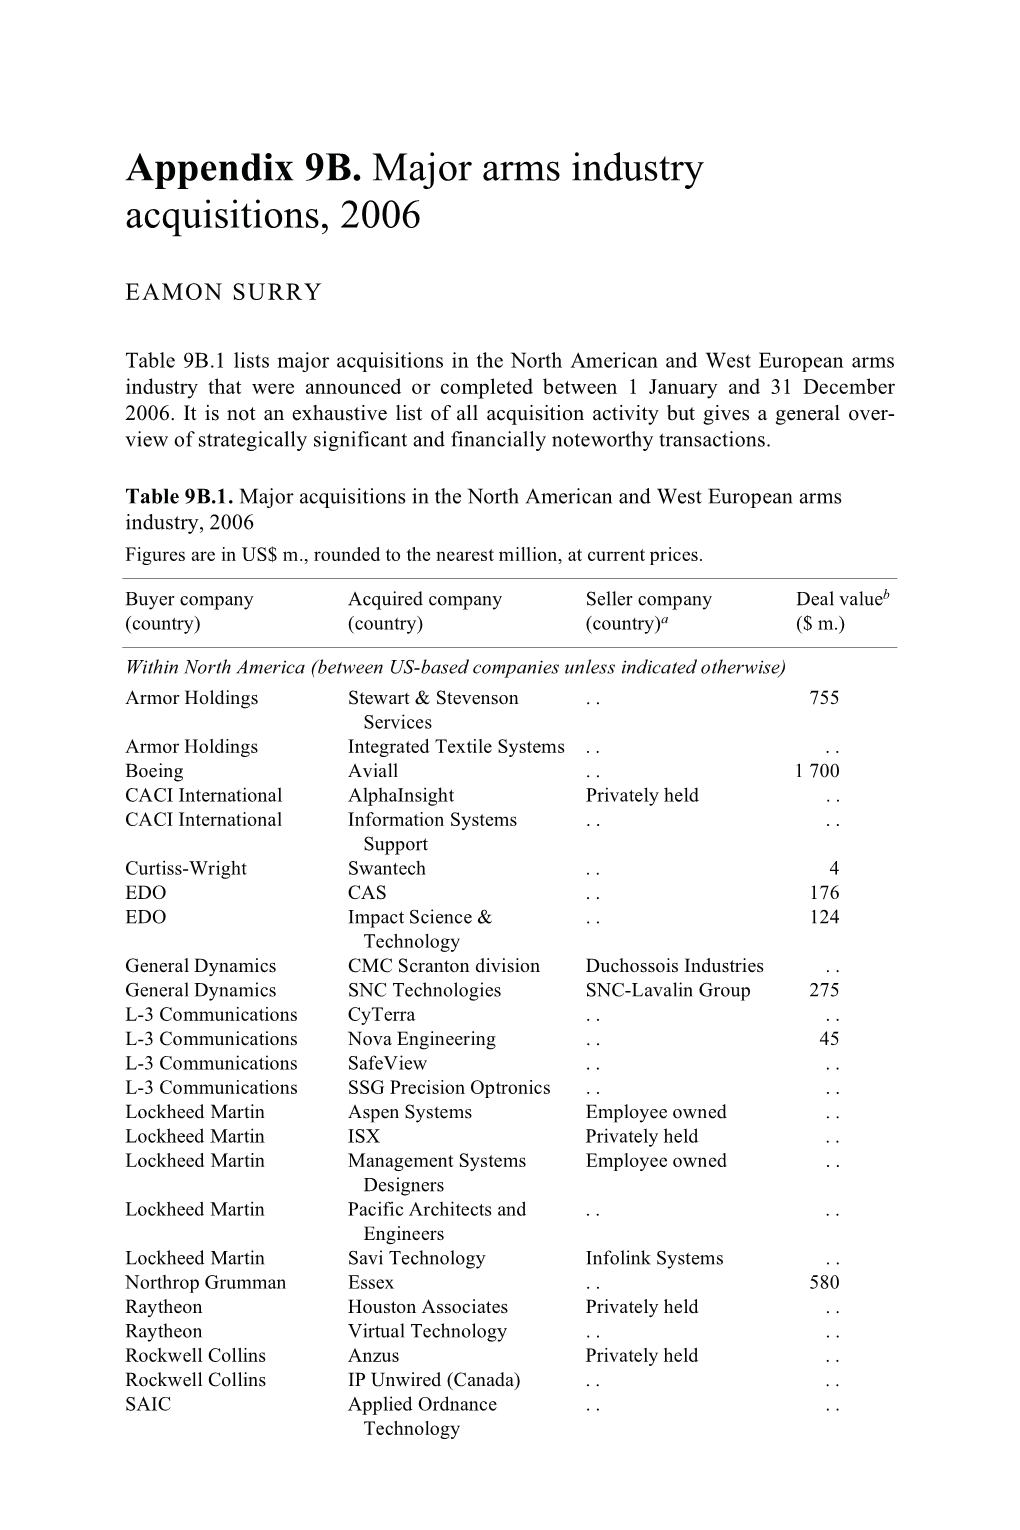 Appendix 9B. Major Arms Industry Acquisitions, 2006